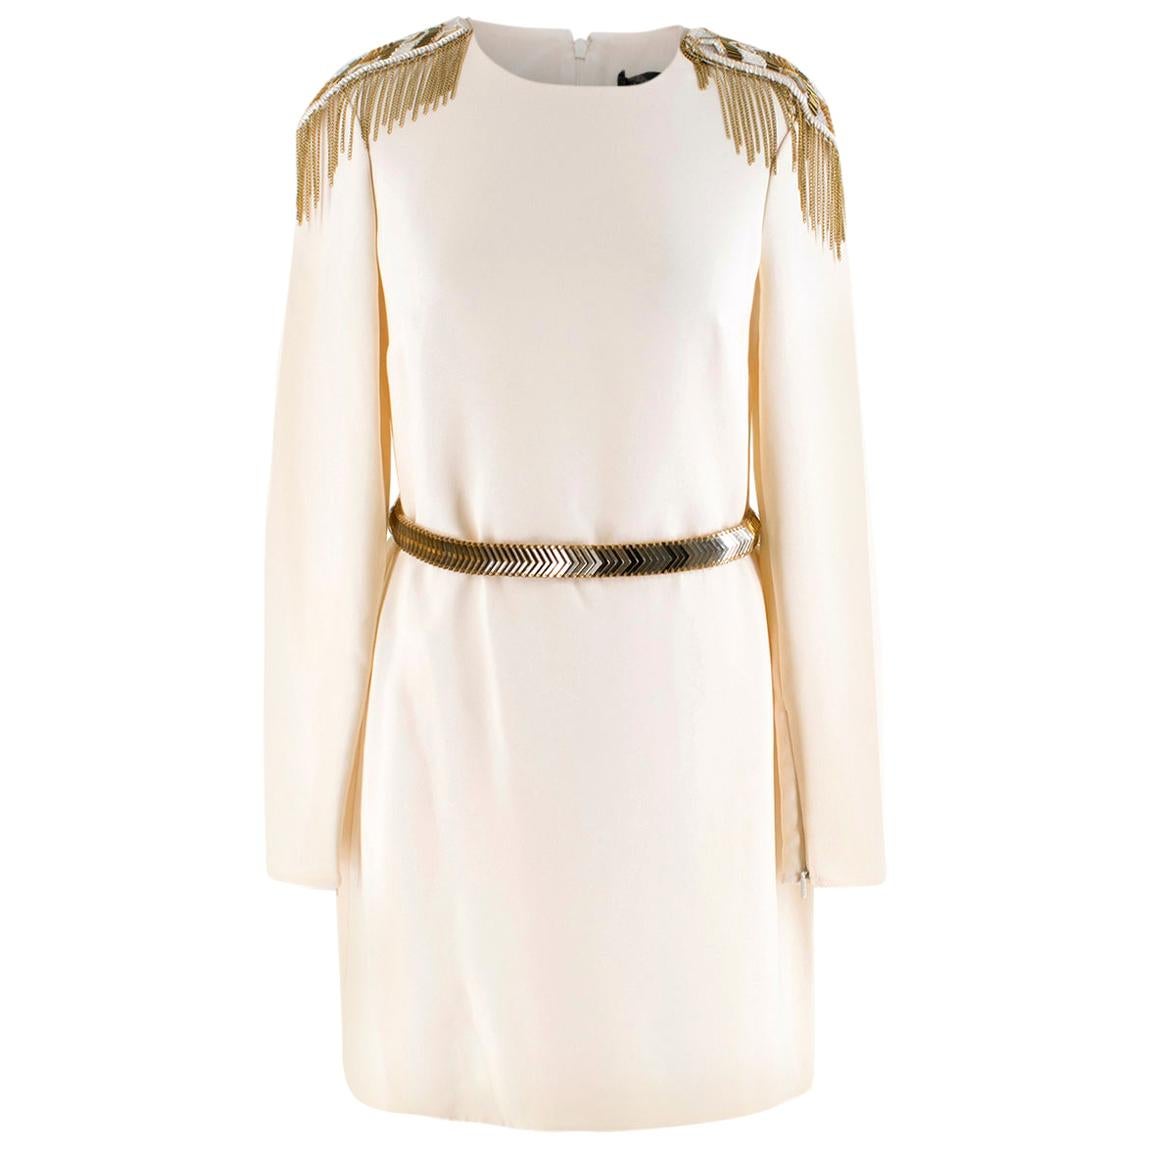 Versace Cream Mini Dress with Crystal Embellished Shoulders & Belt 40 IT